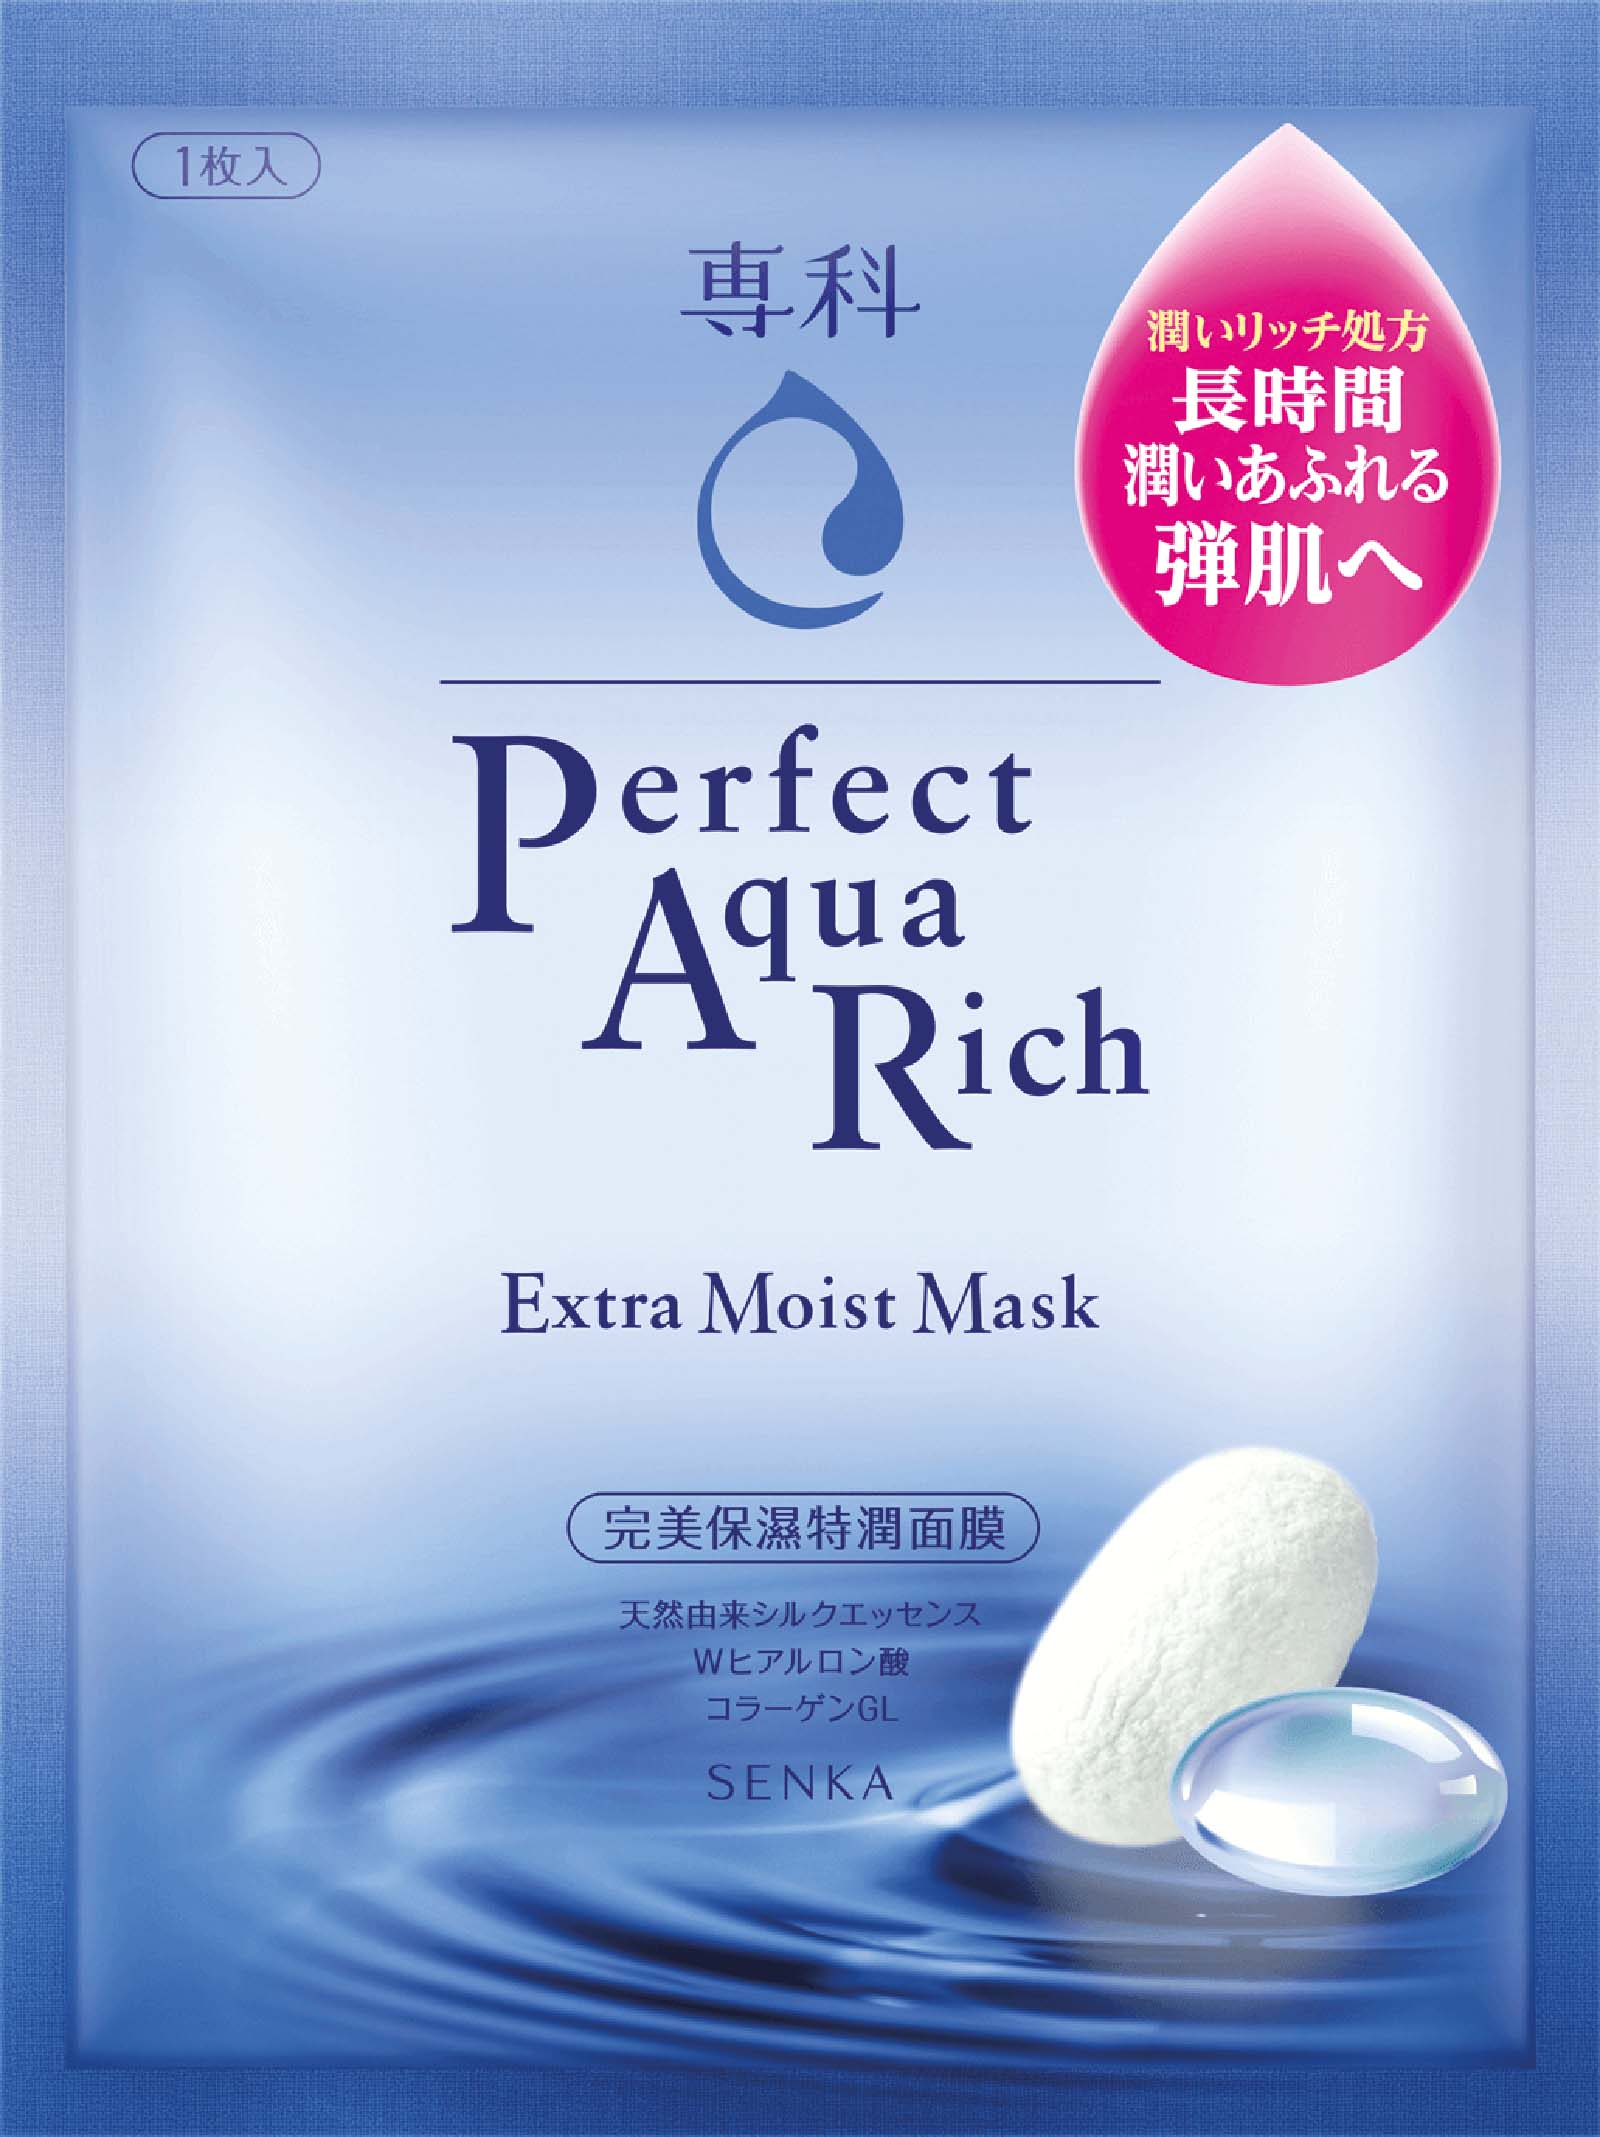 Senka Perfect Aqua Rich Mask – Extra Moist Mask